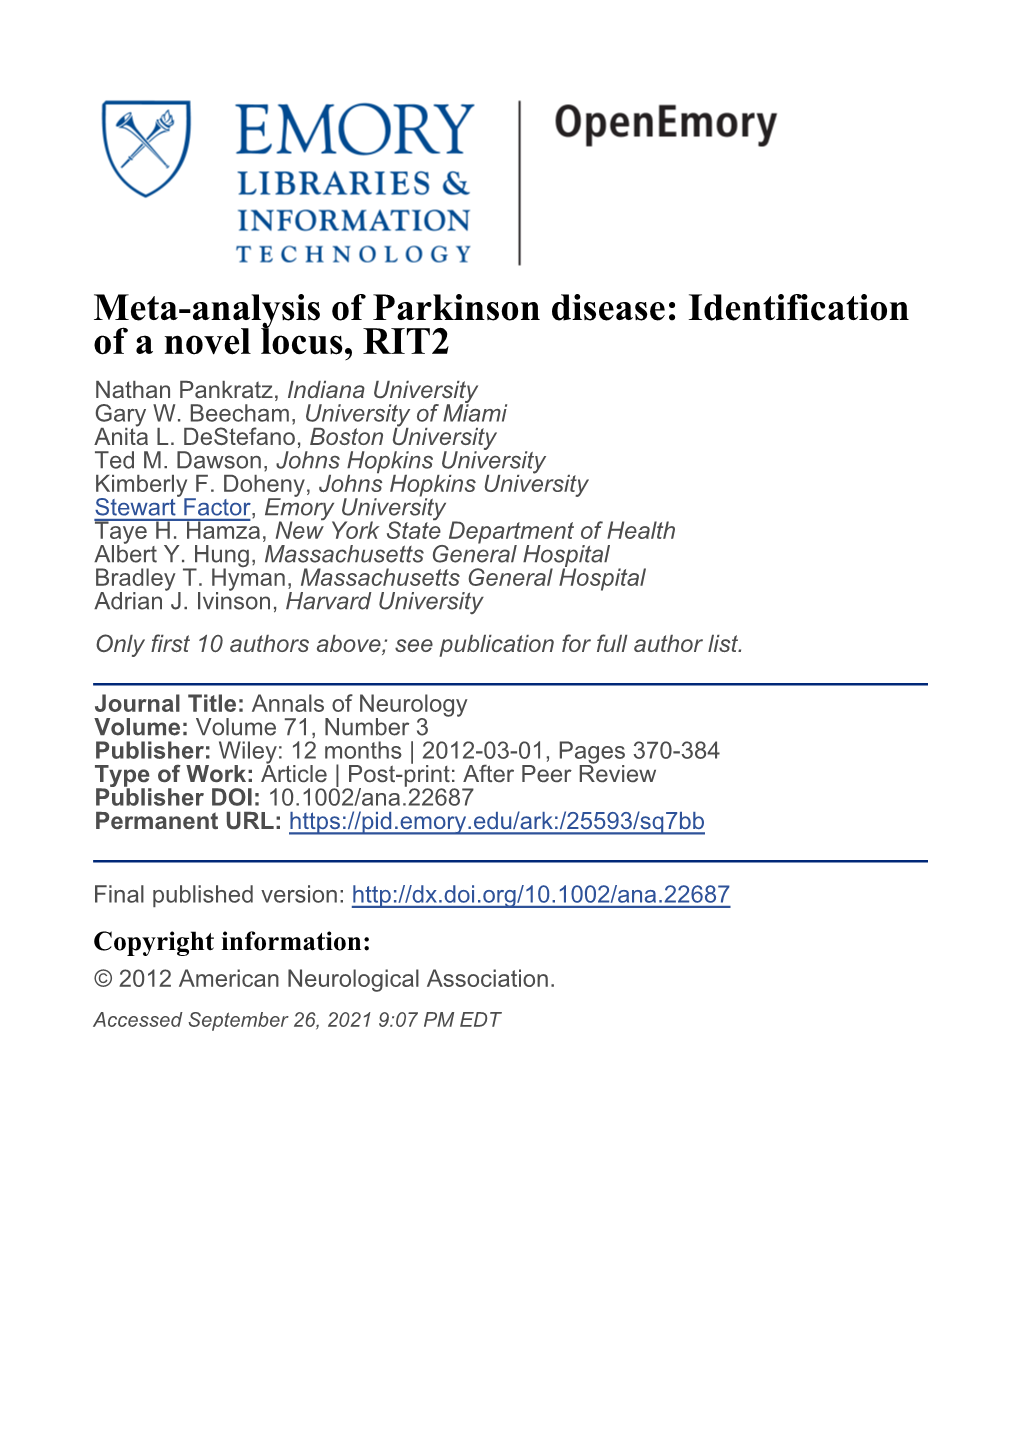 Meta-Analysis of Parkinson Disease: Identification of a Novel Locus, RIT2 Nathan Pankratz, Indiana University Gary W